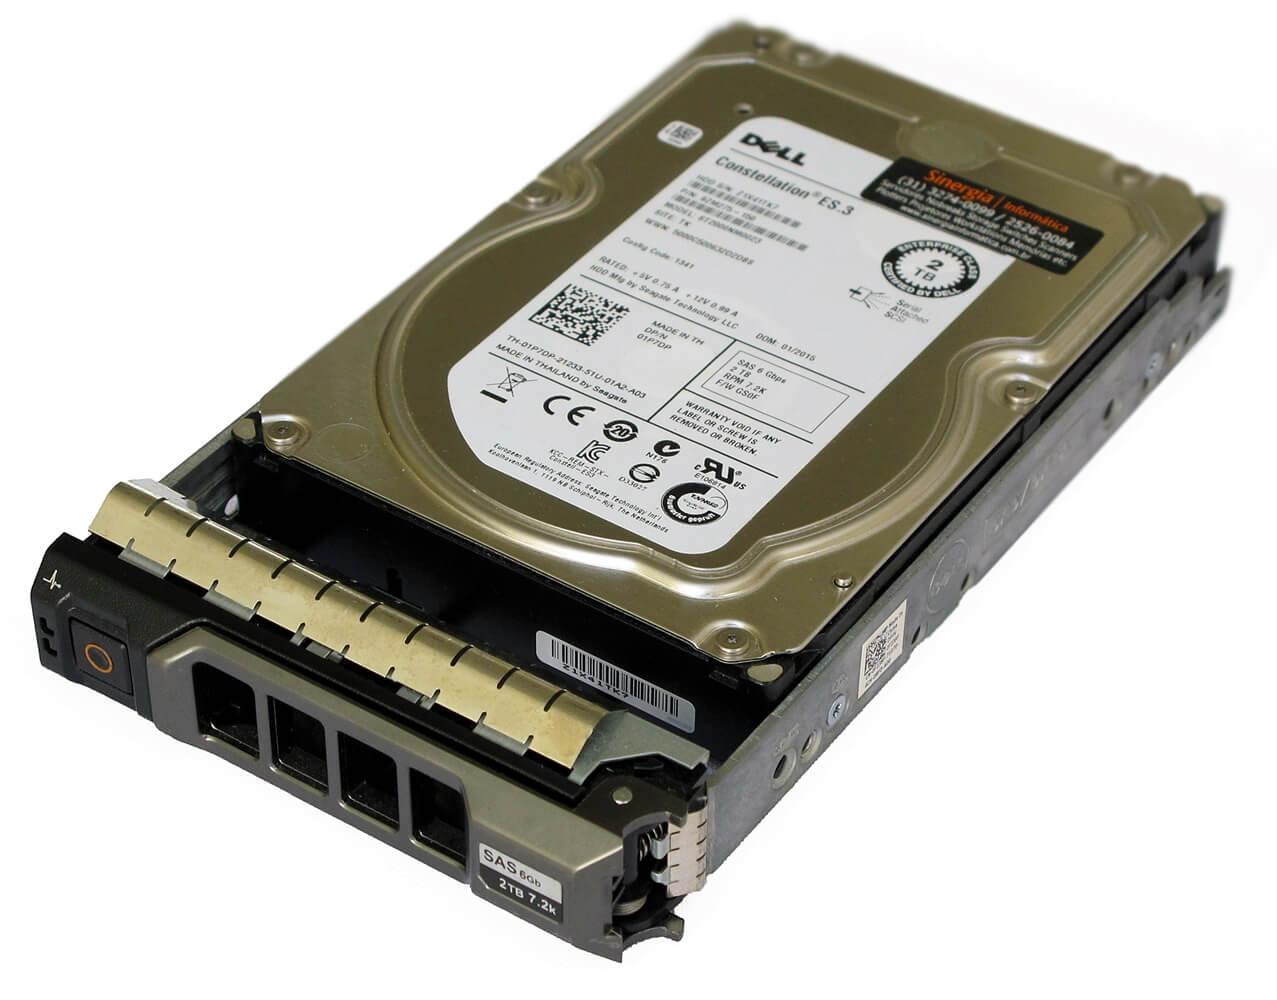 9SM267-150 HD Dell 2TB SAS 6 Gbps 7.2K RPM LFF 3.5" para Storage Dell MD3200 pronta entrega